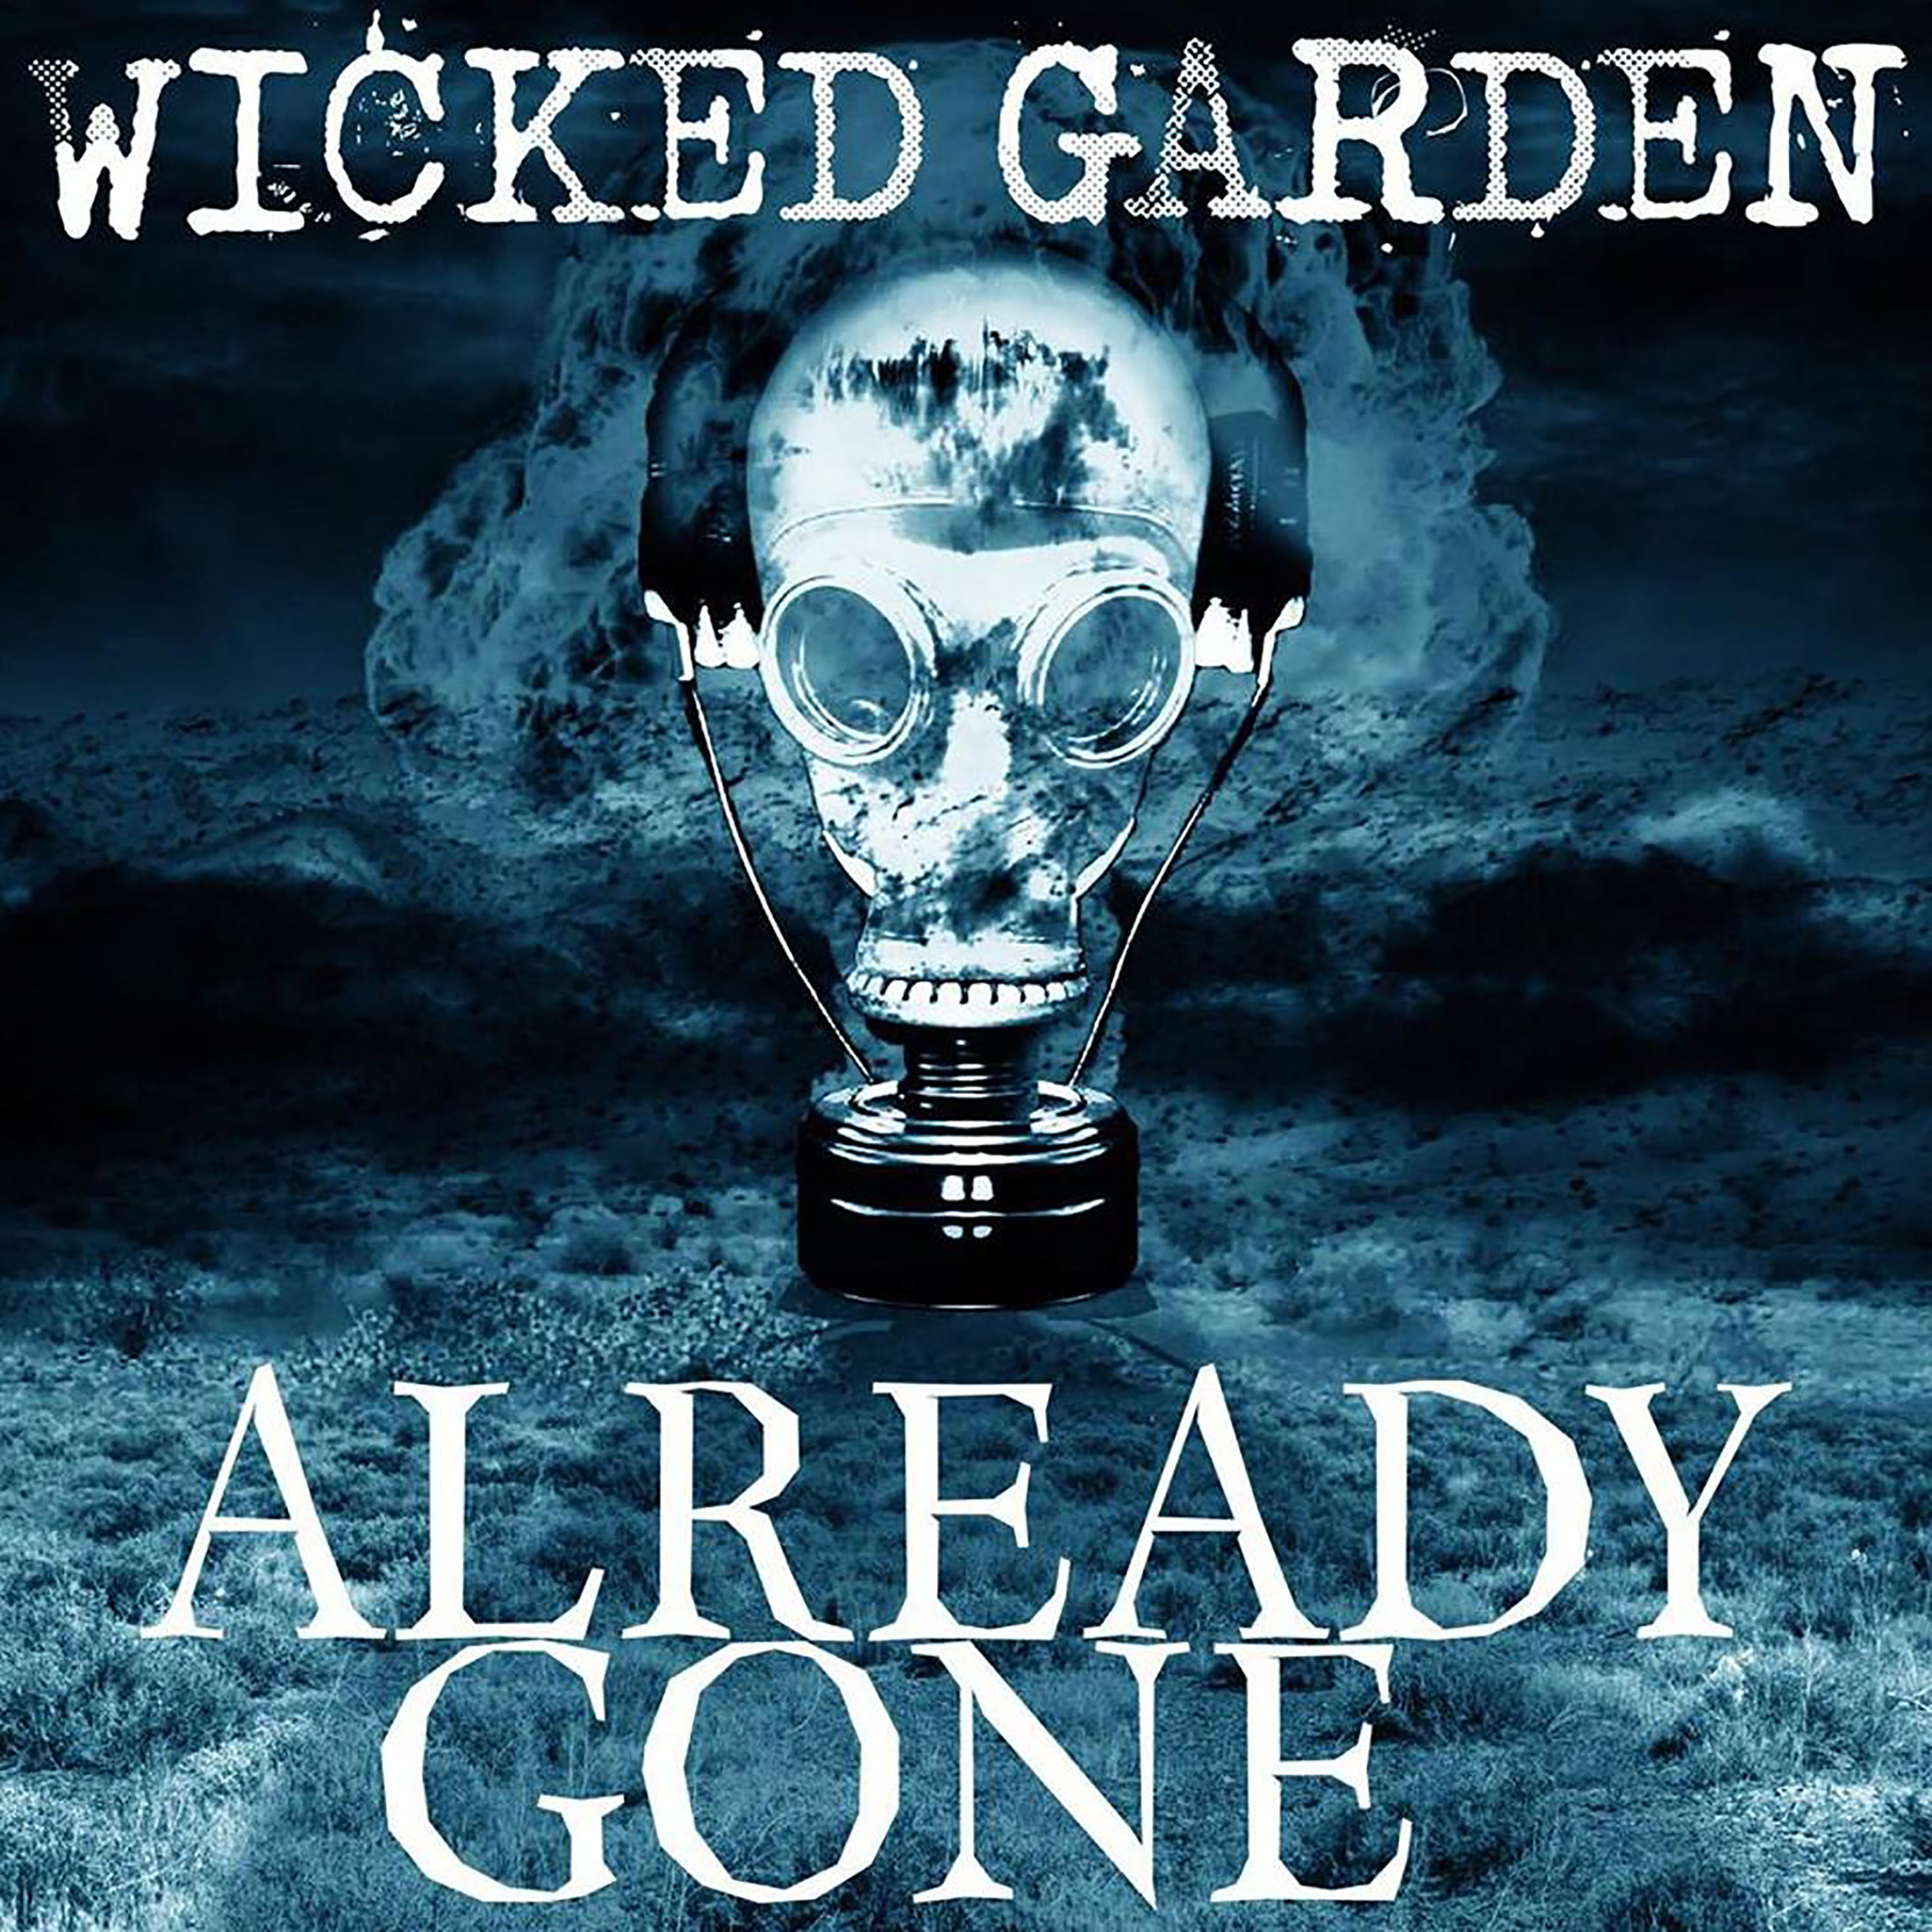 Wicked Garden Post Dystopian Leisure Music Teaser: Already Gone EP